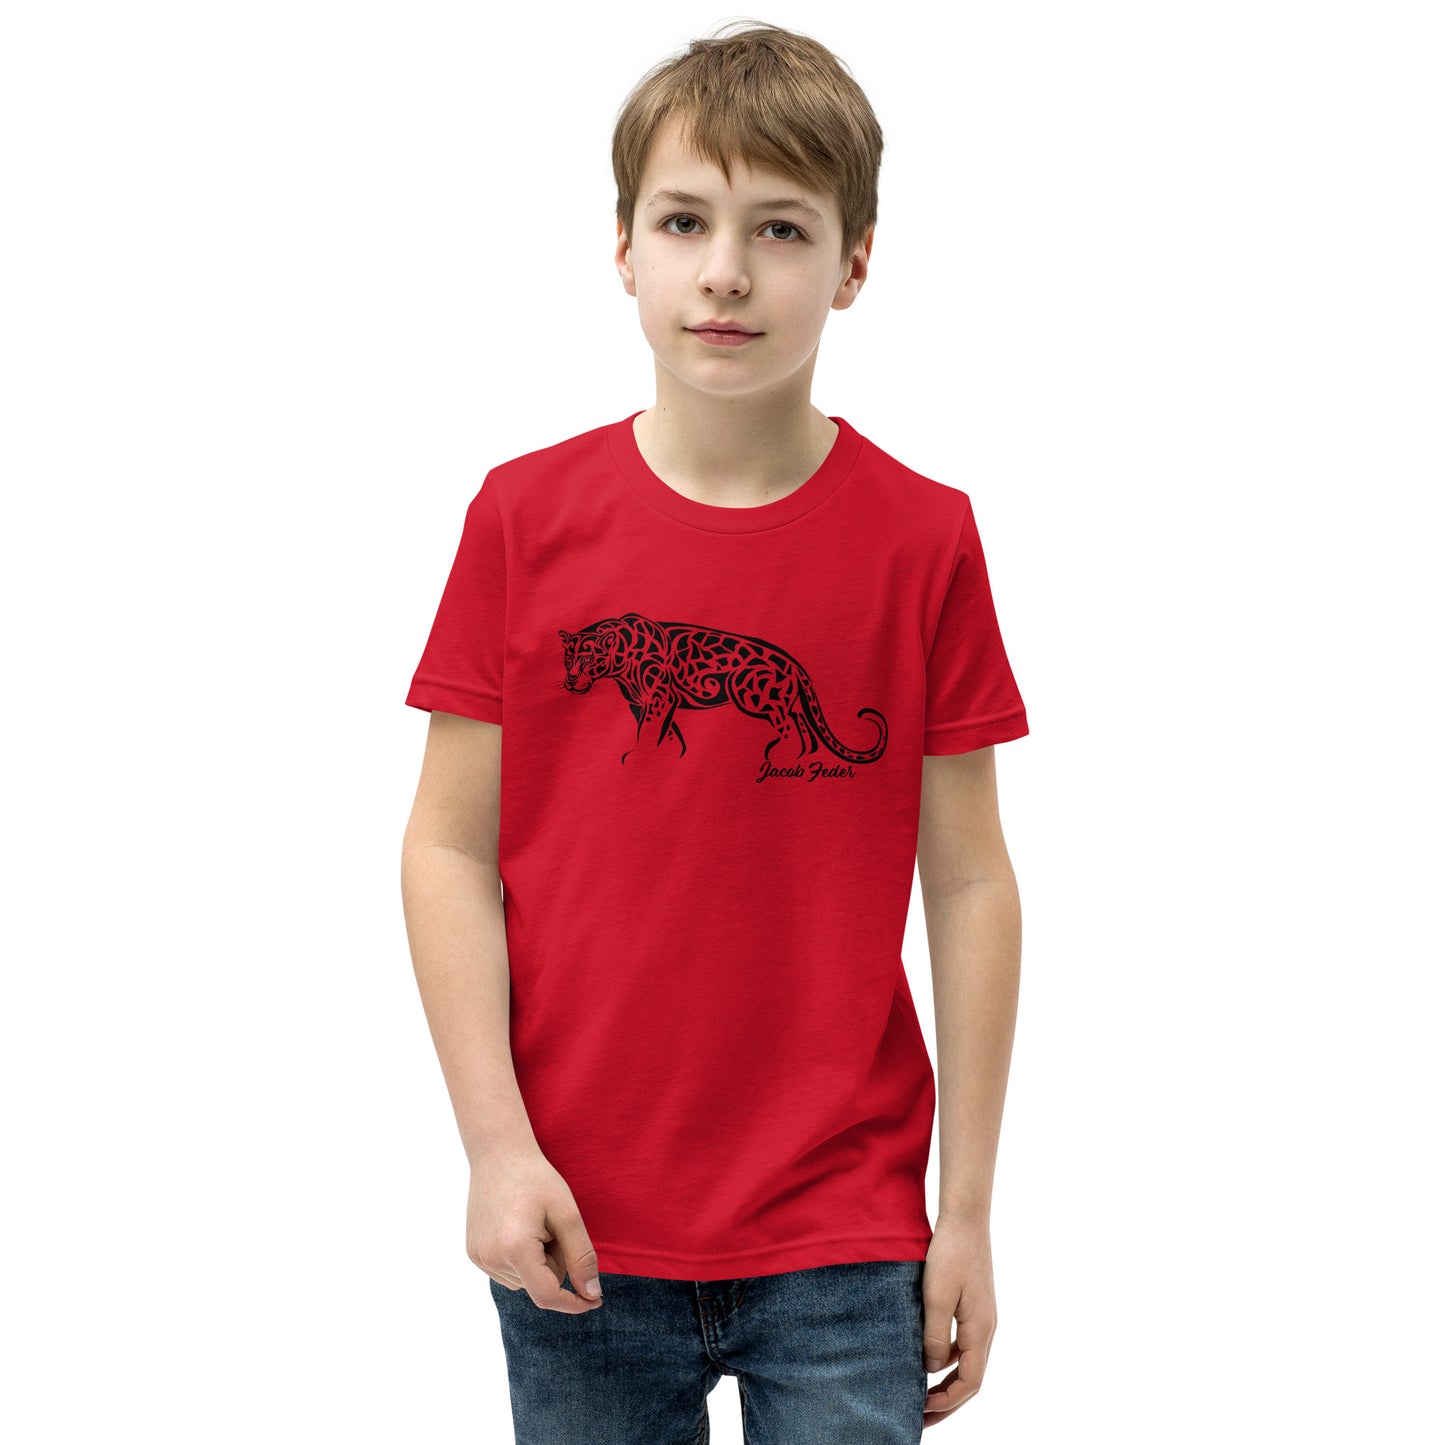 Jacob Feder Youth T-Shirt